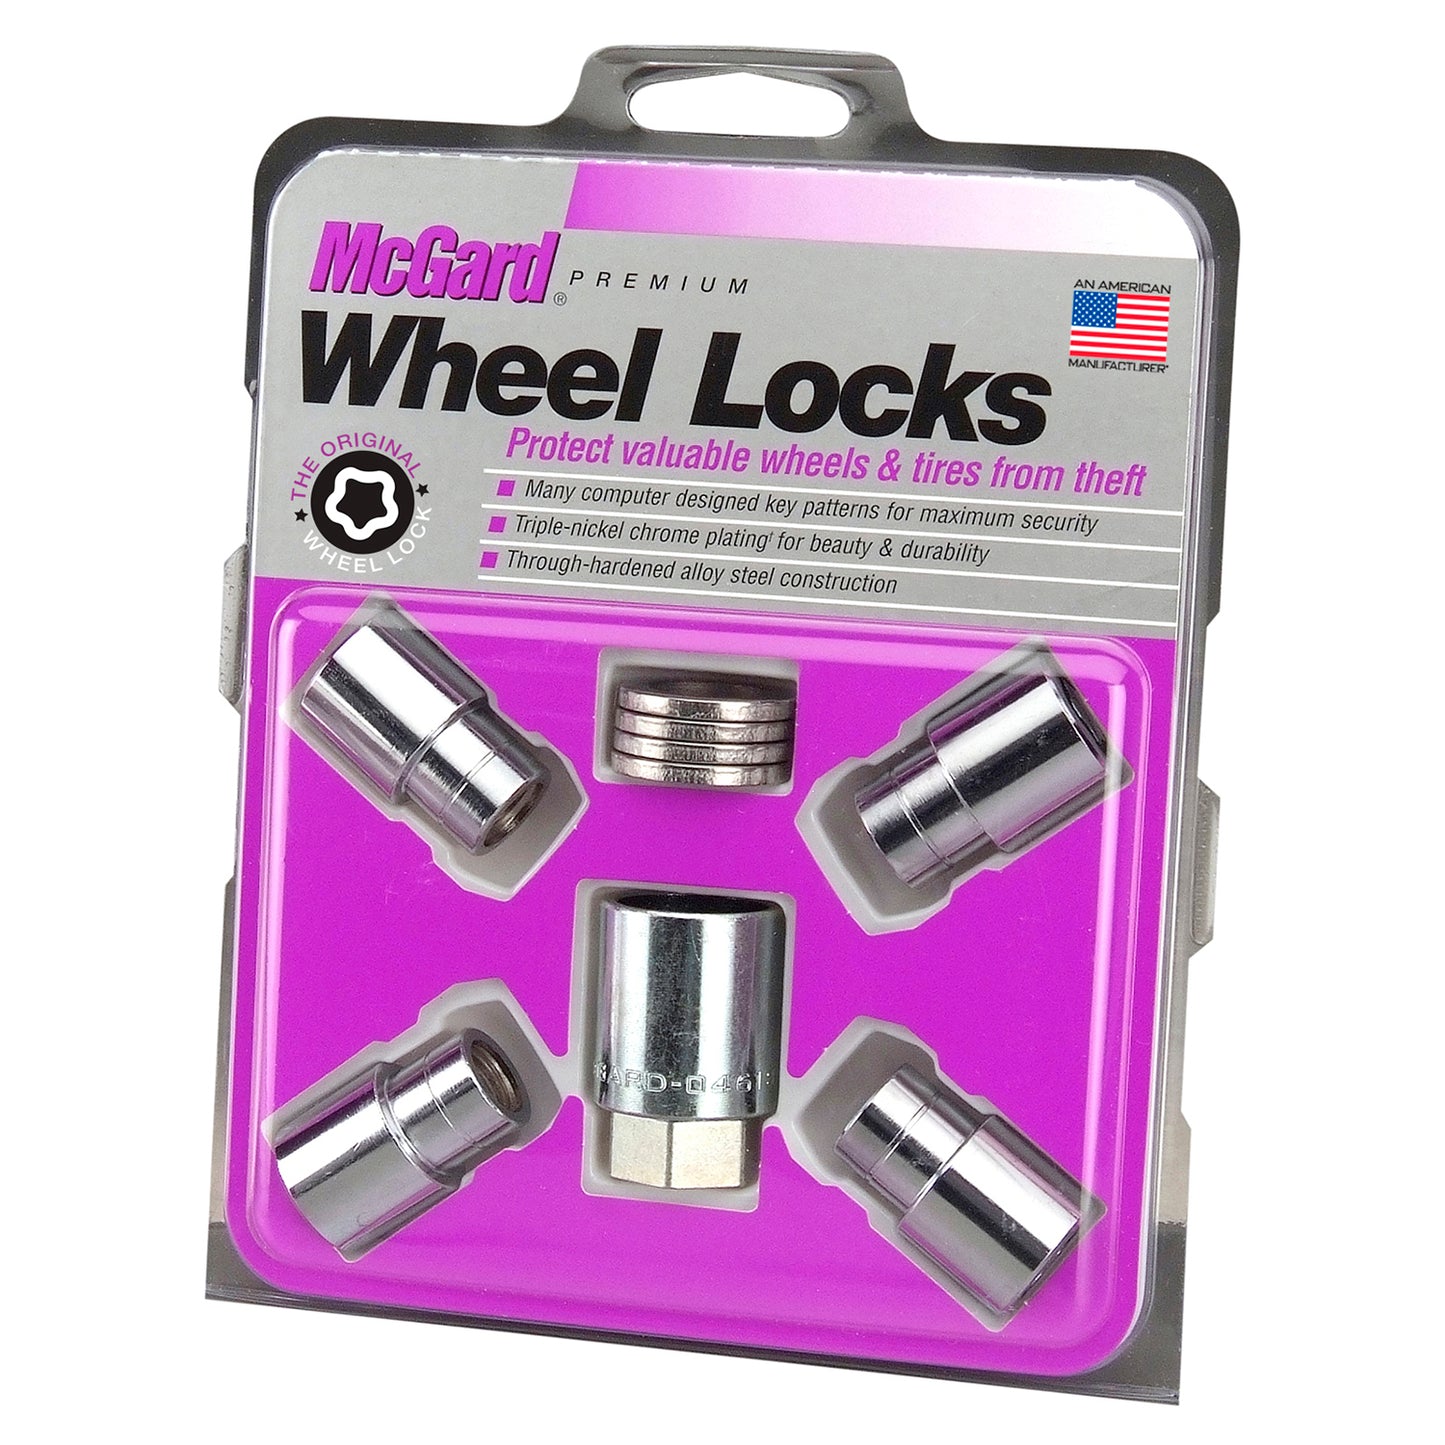 McGard 21156. Chrome Regular Shank Wheel Lock Set (M12 x 1.5 Thread Size) – Set of 4 Locks, 4 Washers and 1 Key.